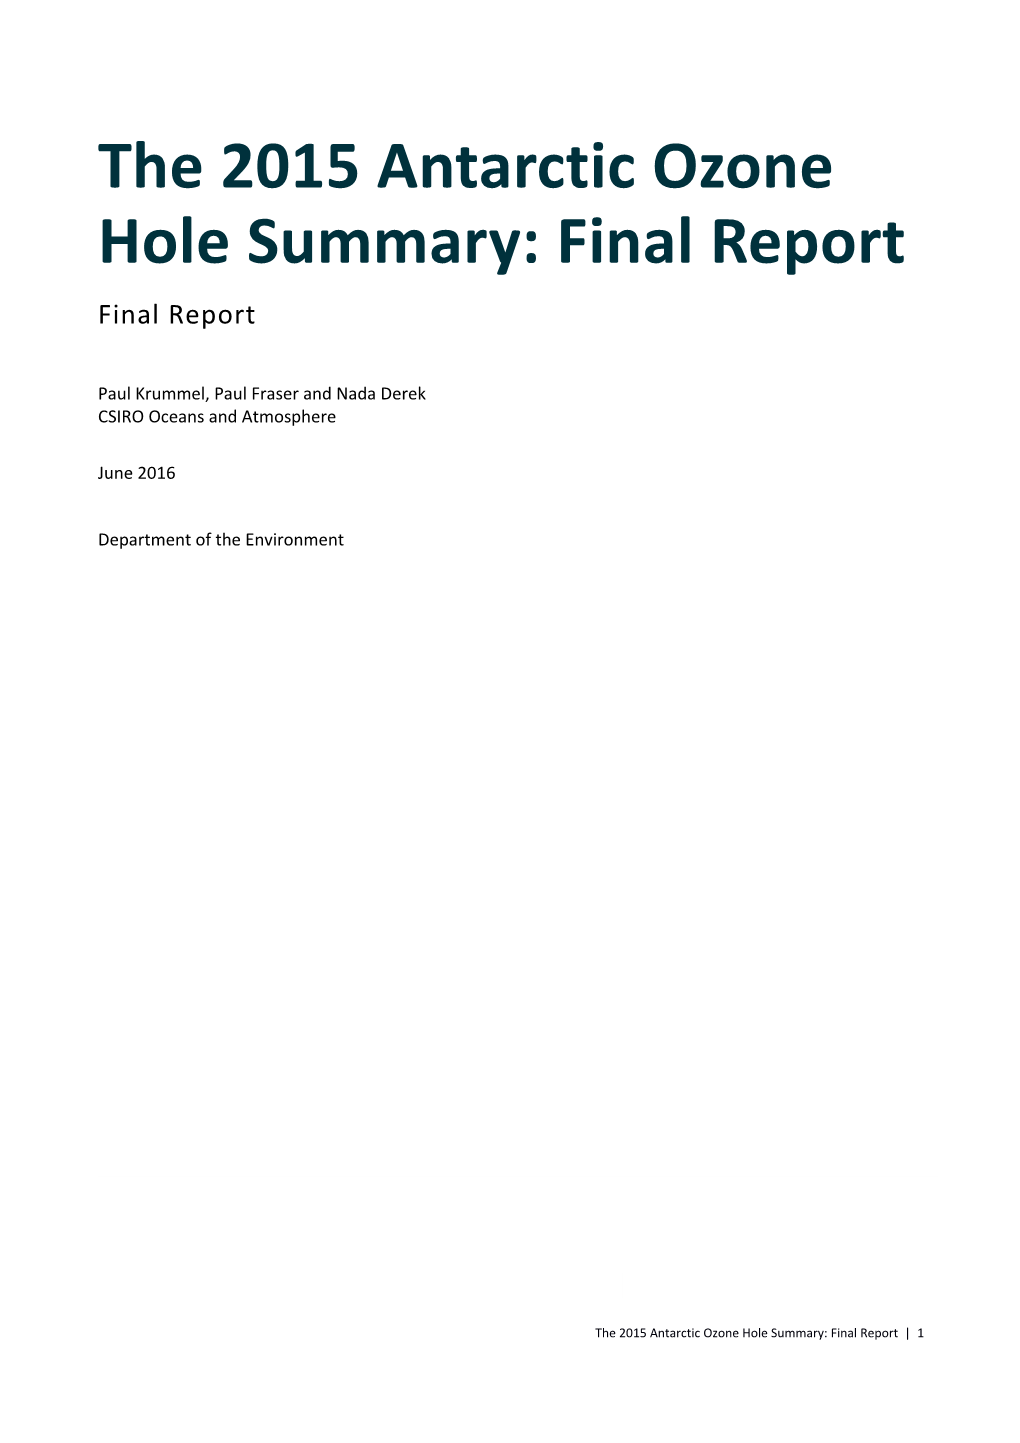 The 2015 Antarctic Ozone Hole Summary: Final Report